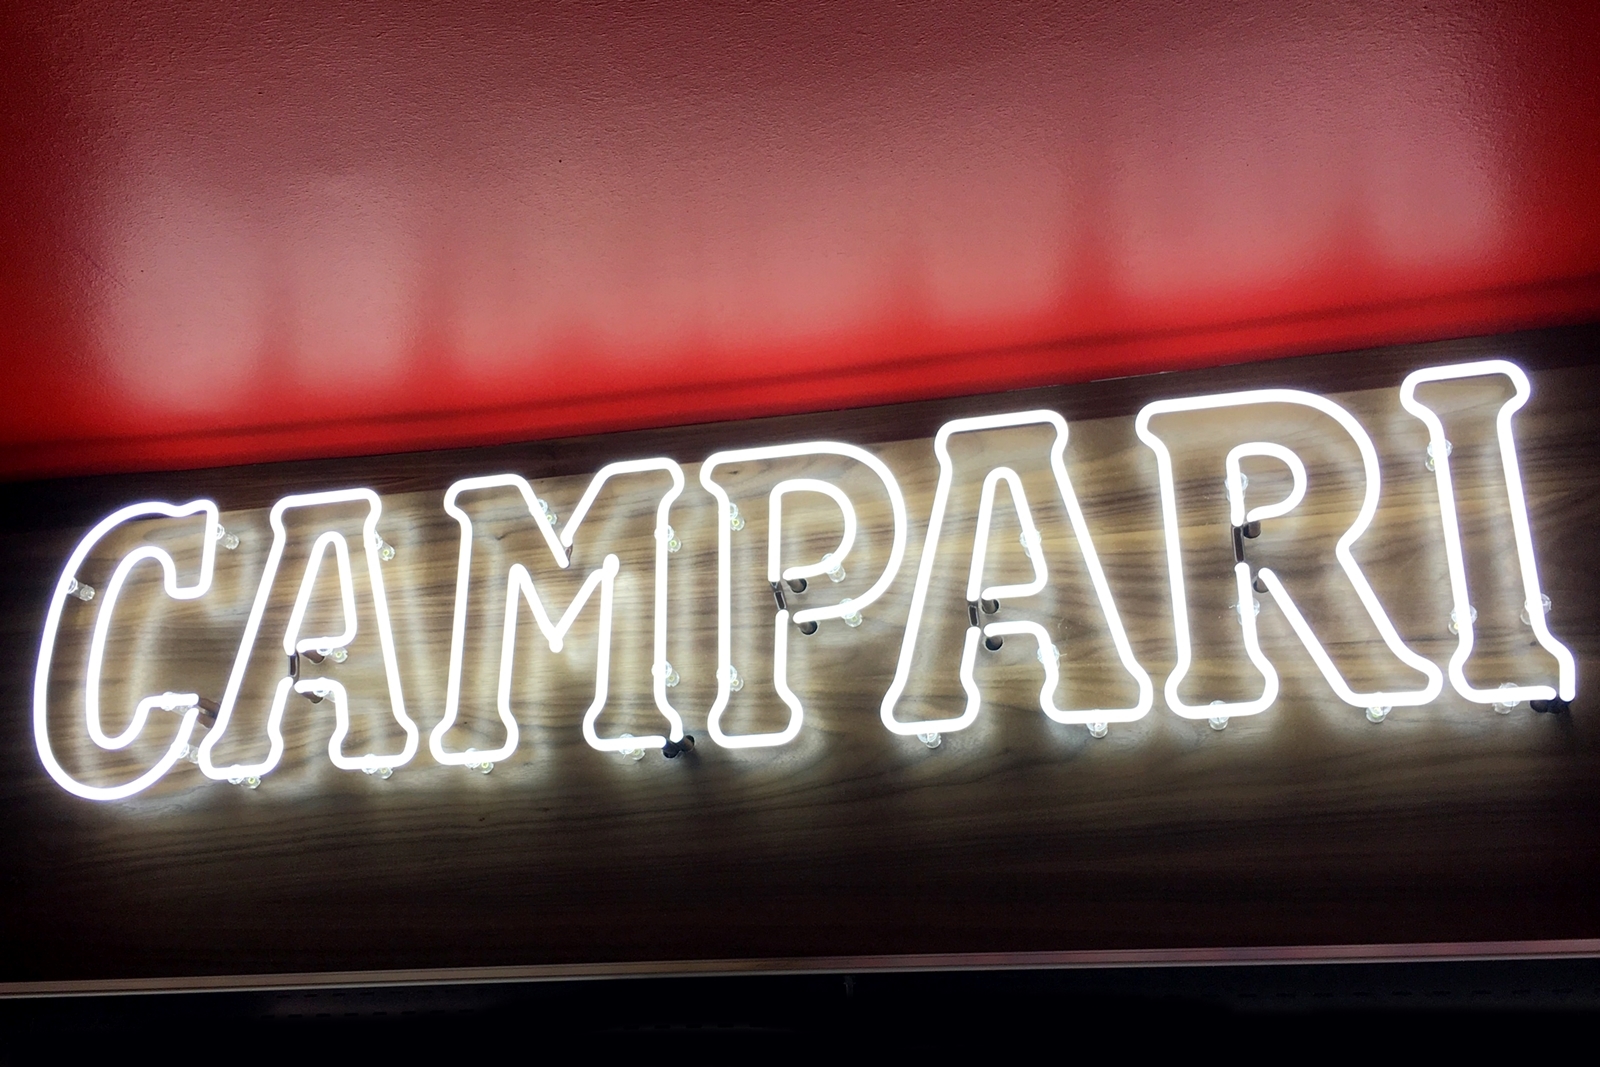 Bar Campari im Frankowitsch - Graz - VIP Opening - Lokal Tipp - Fashionladyloves by Tamara Wagner - Lifestyleblog